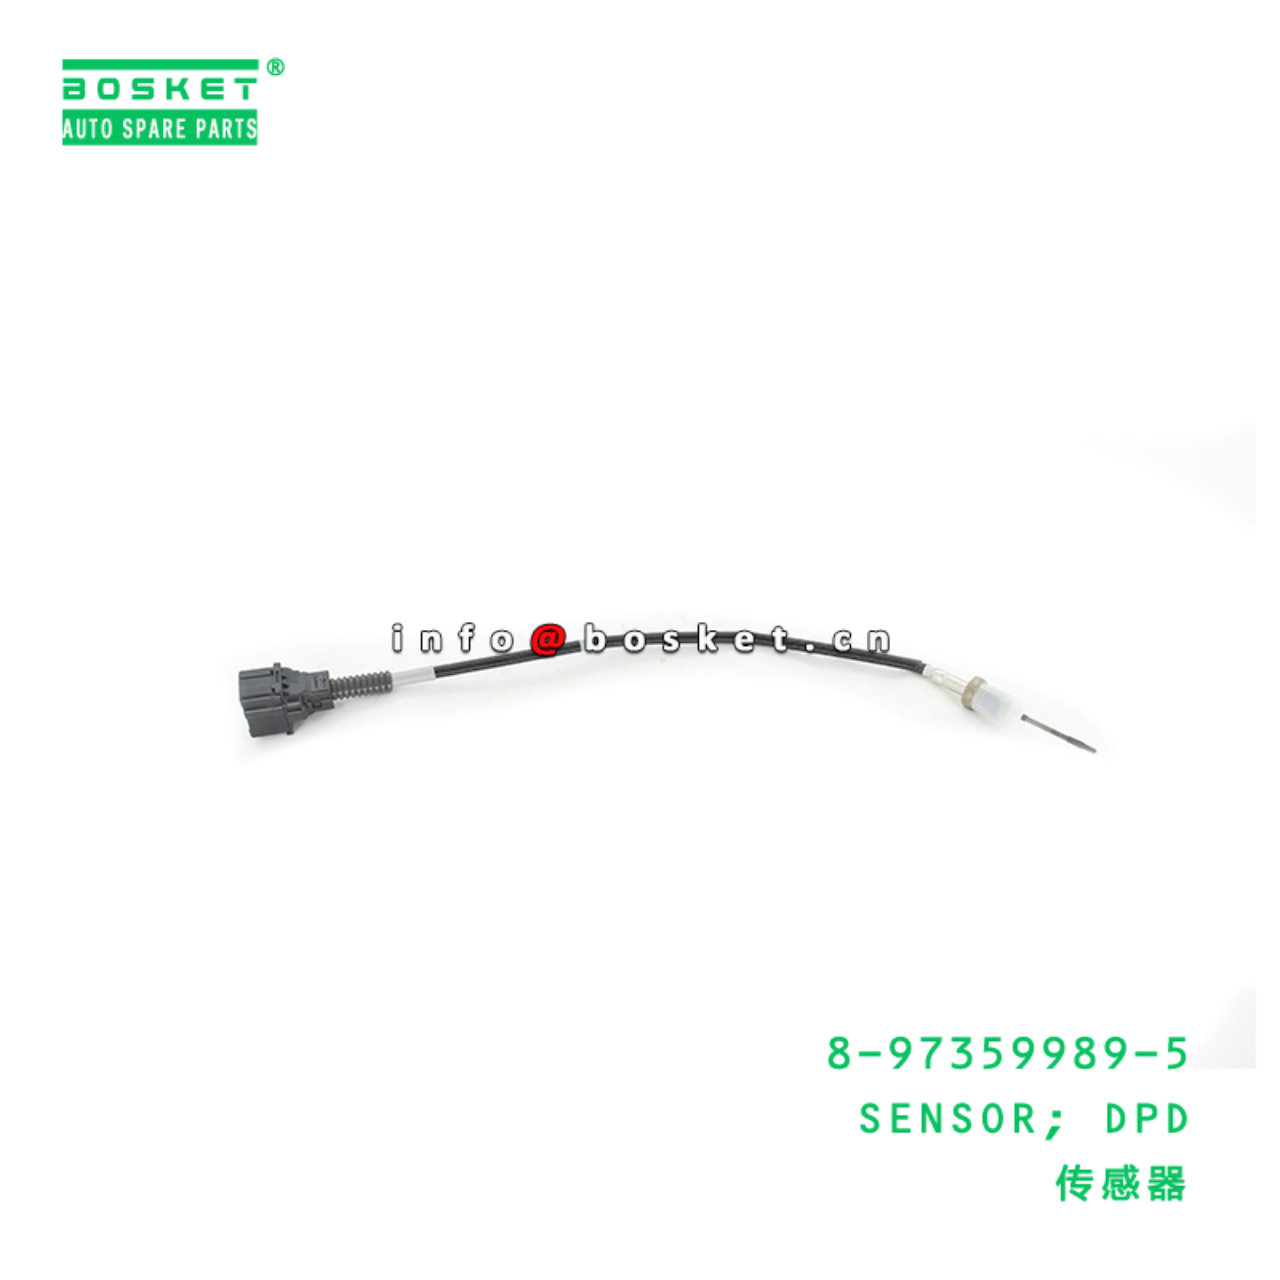 8-97359989-5 Dpd Sensor Suitable for ISUZU FRR FSR NPR 8973599895